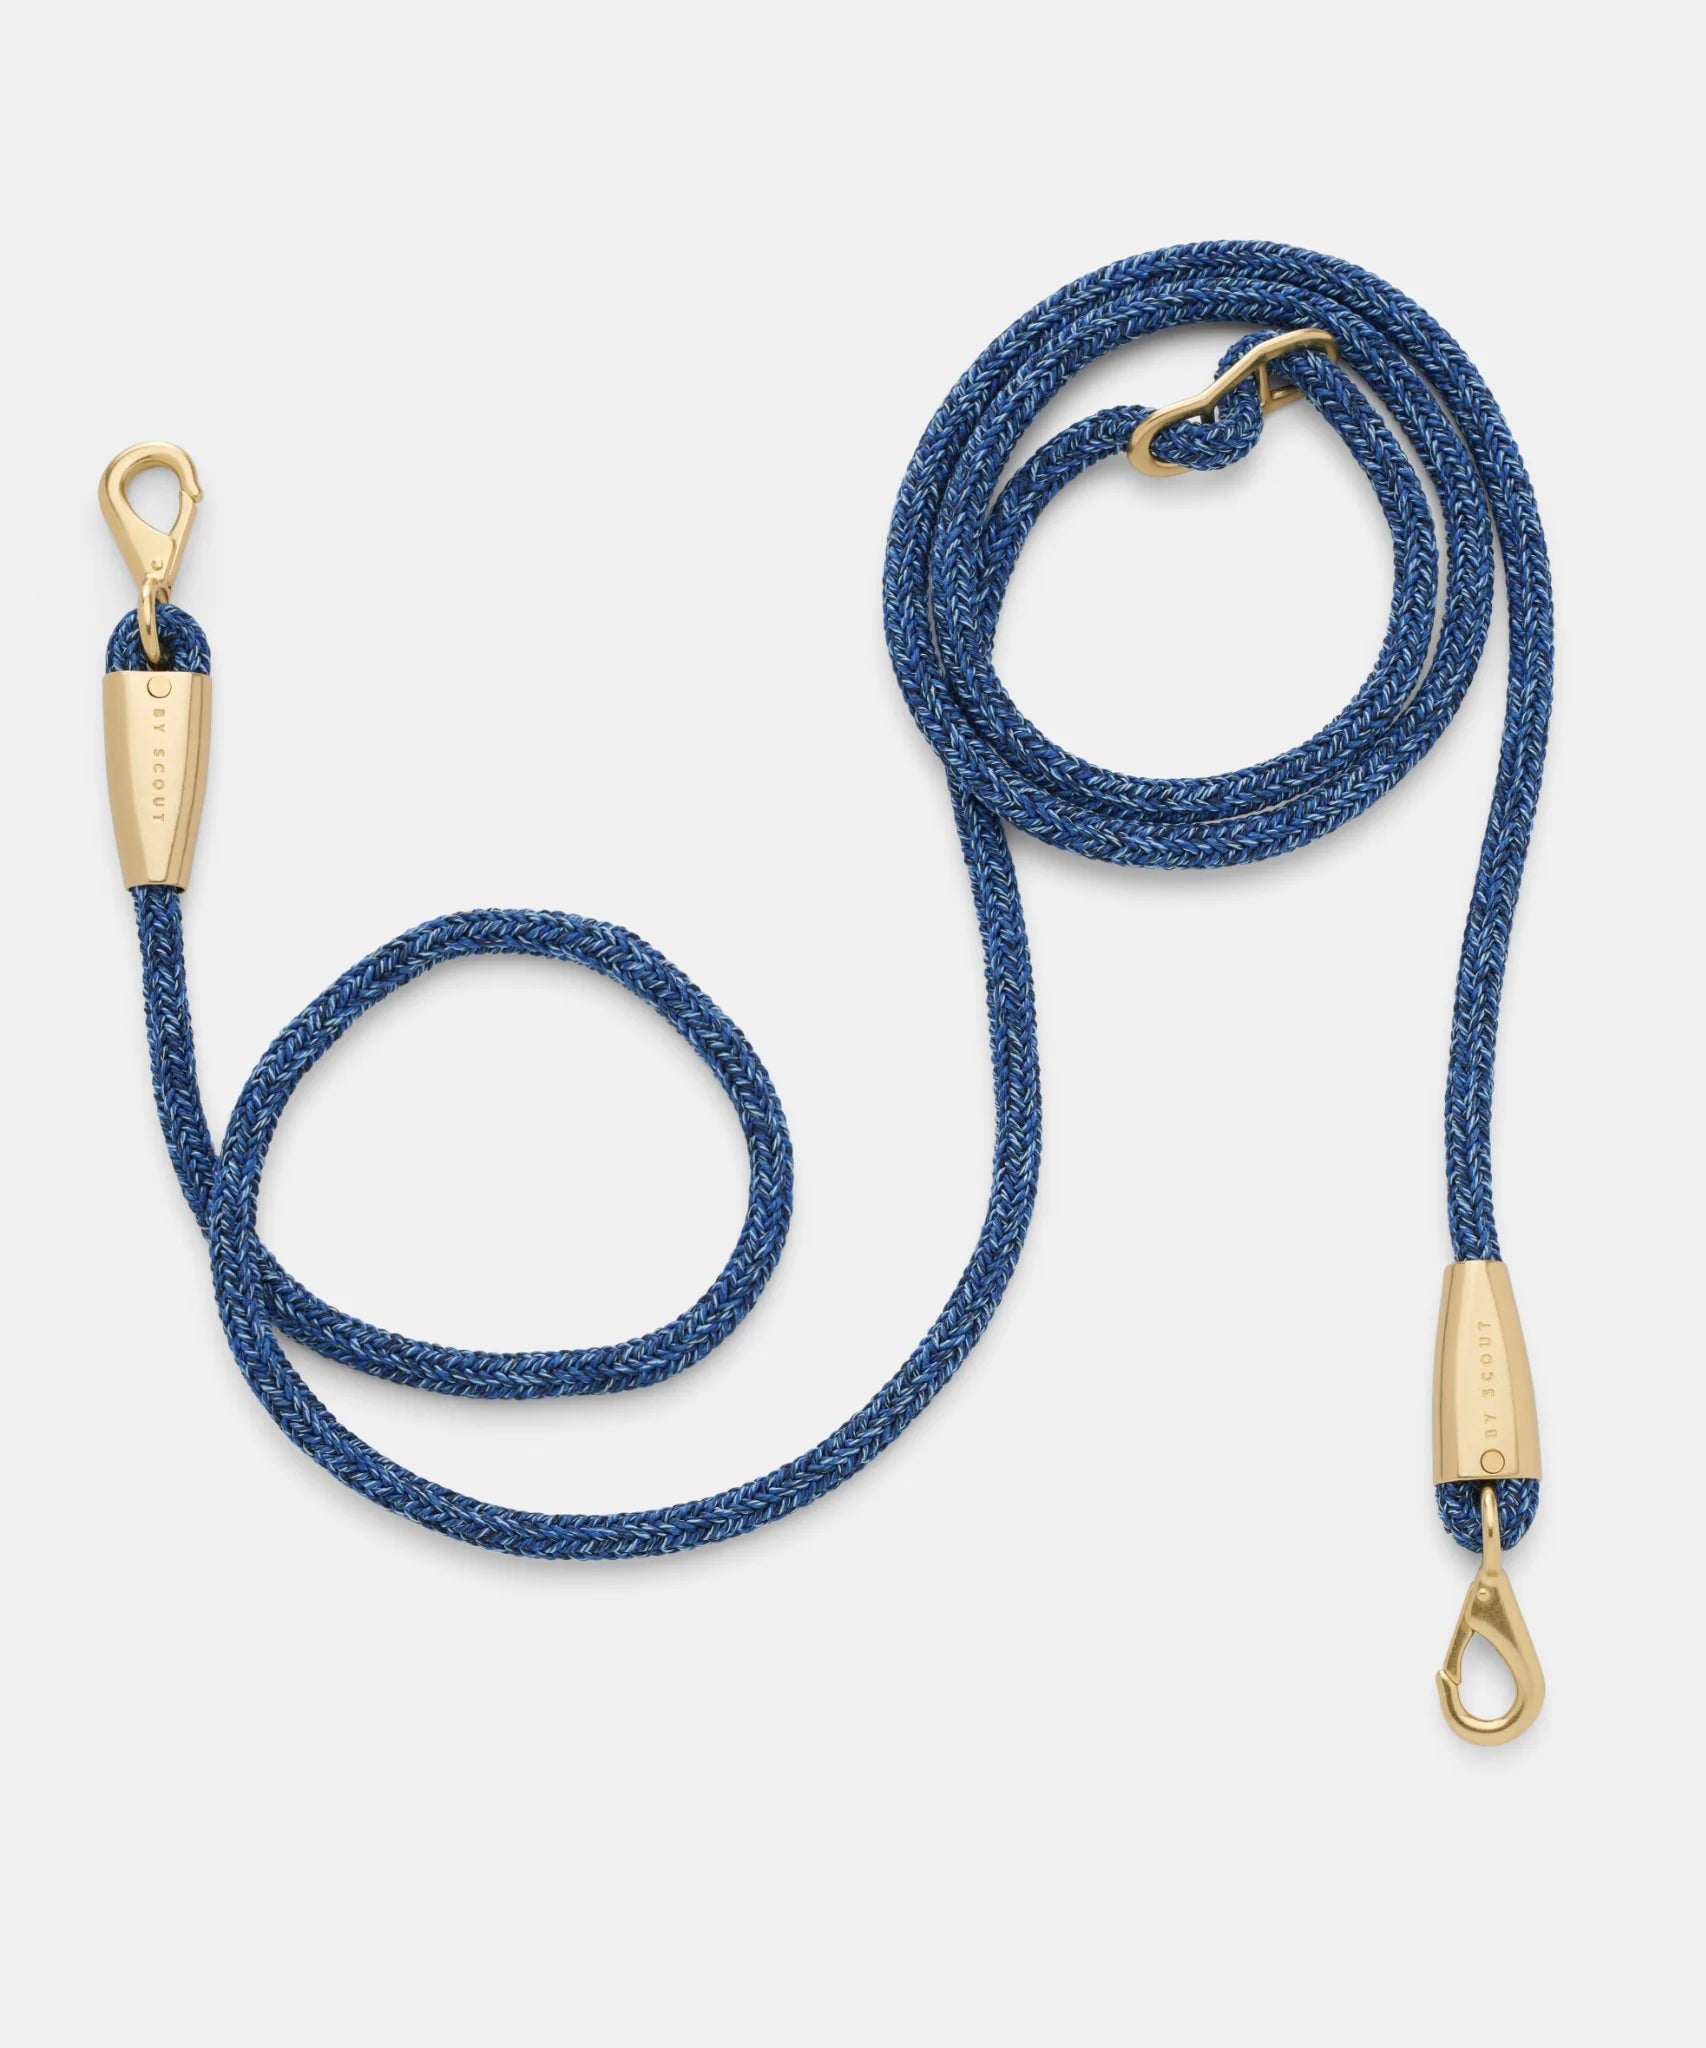 Every Adjustable Rope Leash - Blue blend